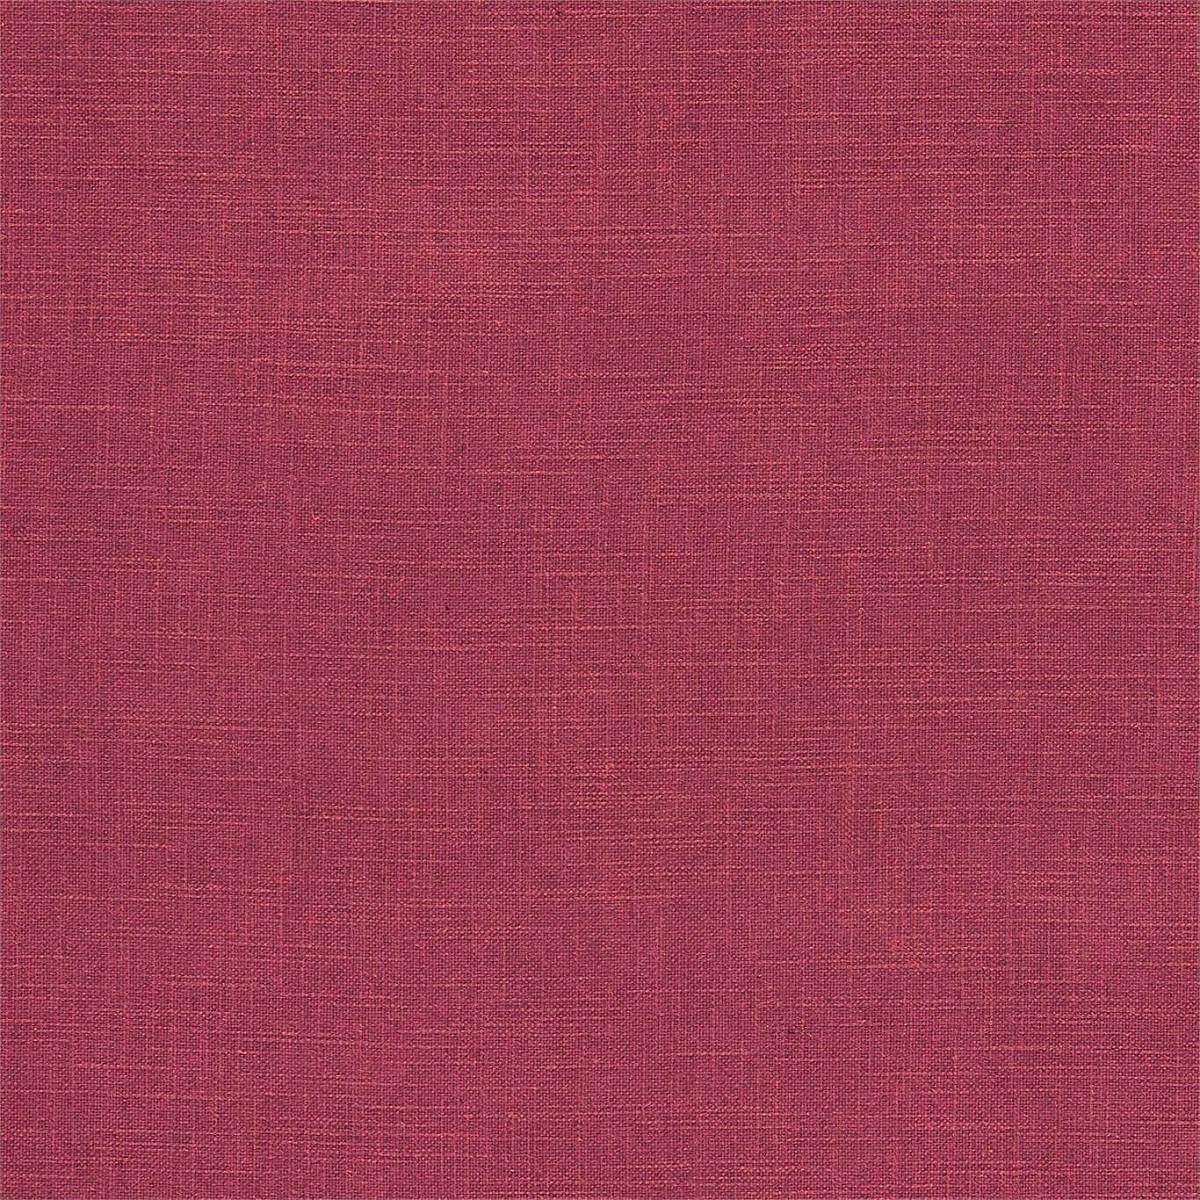 Tuscany Ii Raspberry Fabric by Sanderson